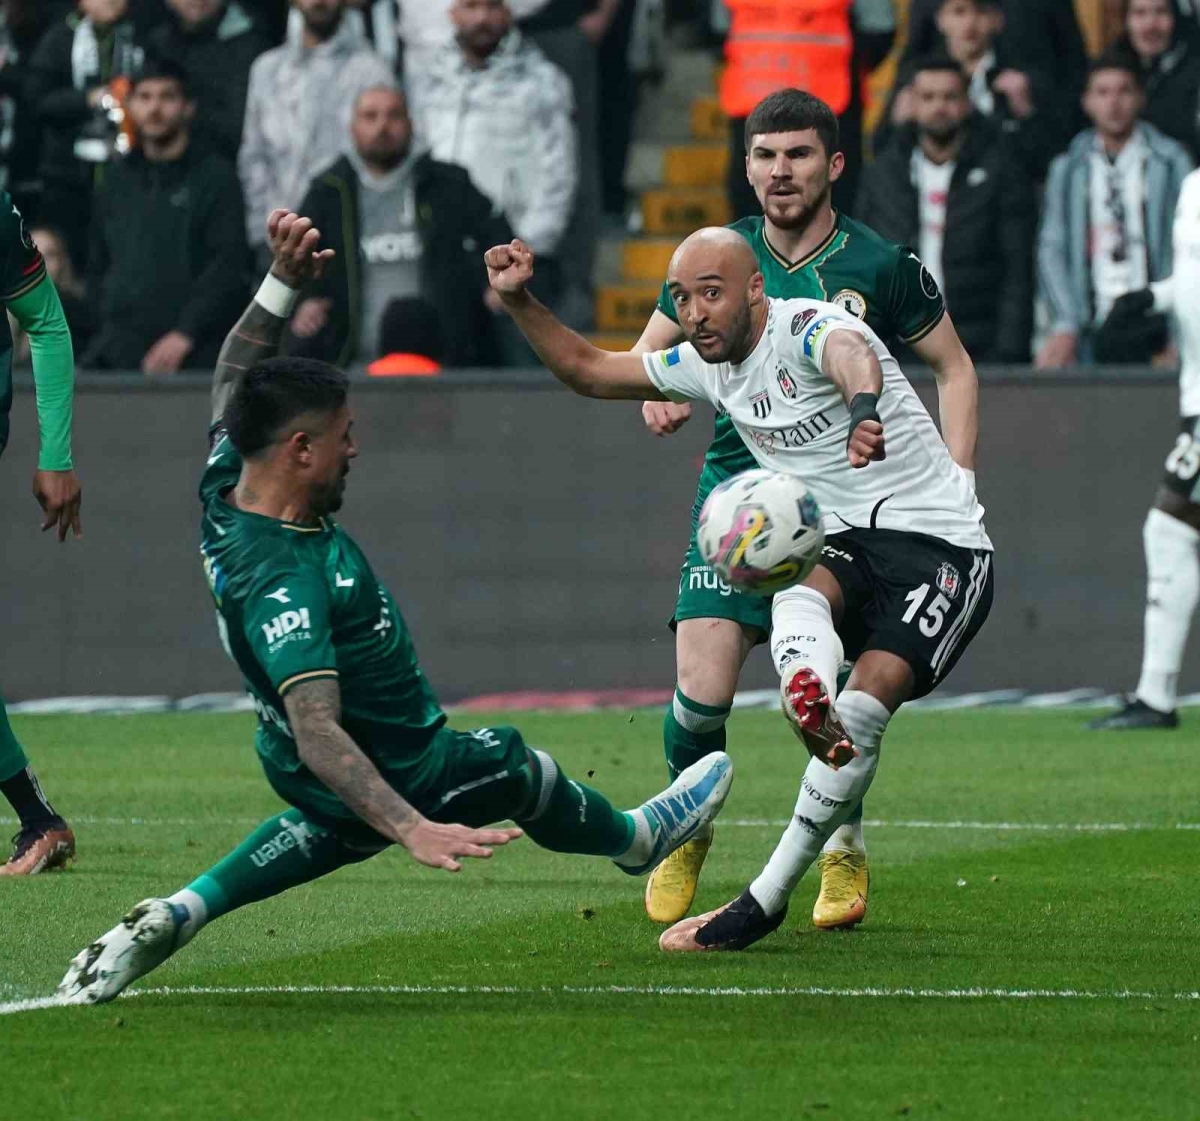 Spor Toto Süper Lig: Beşiktaş: 3 - Giresunspor: 1 (Maç sonucu)
